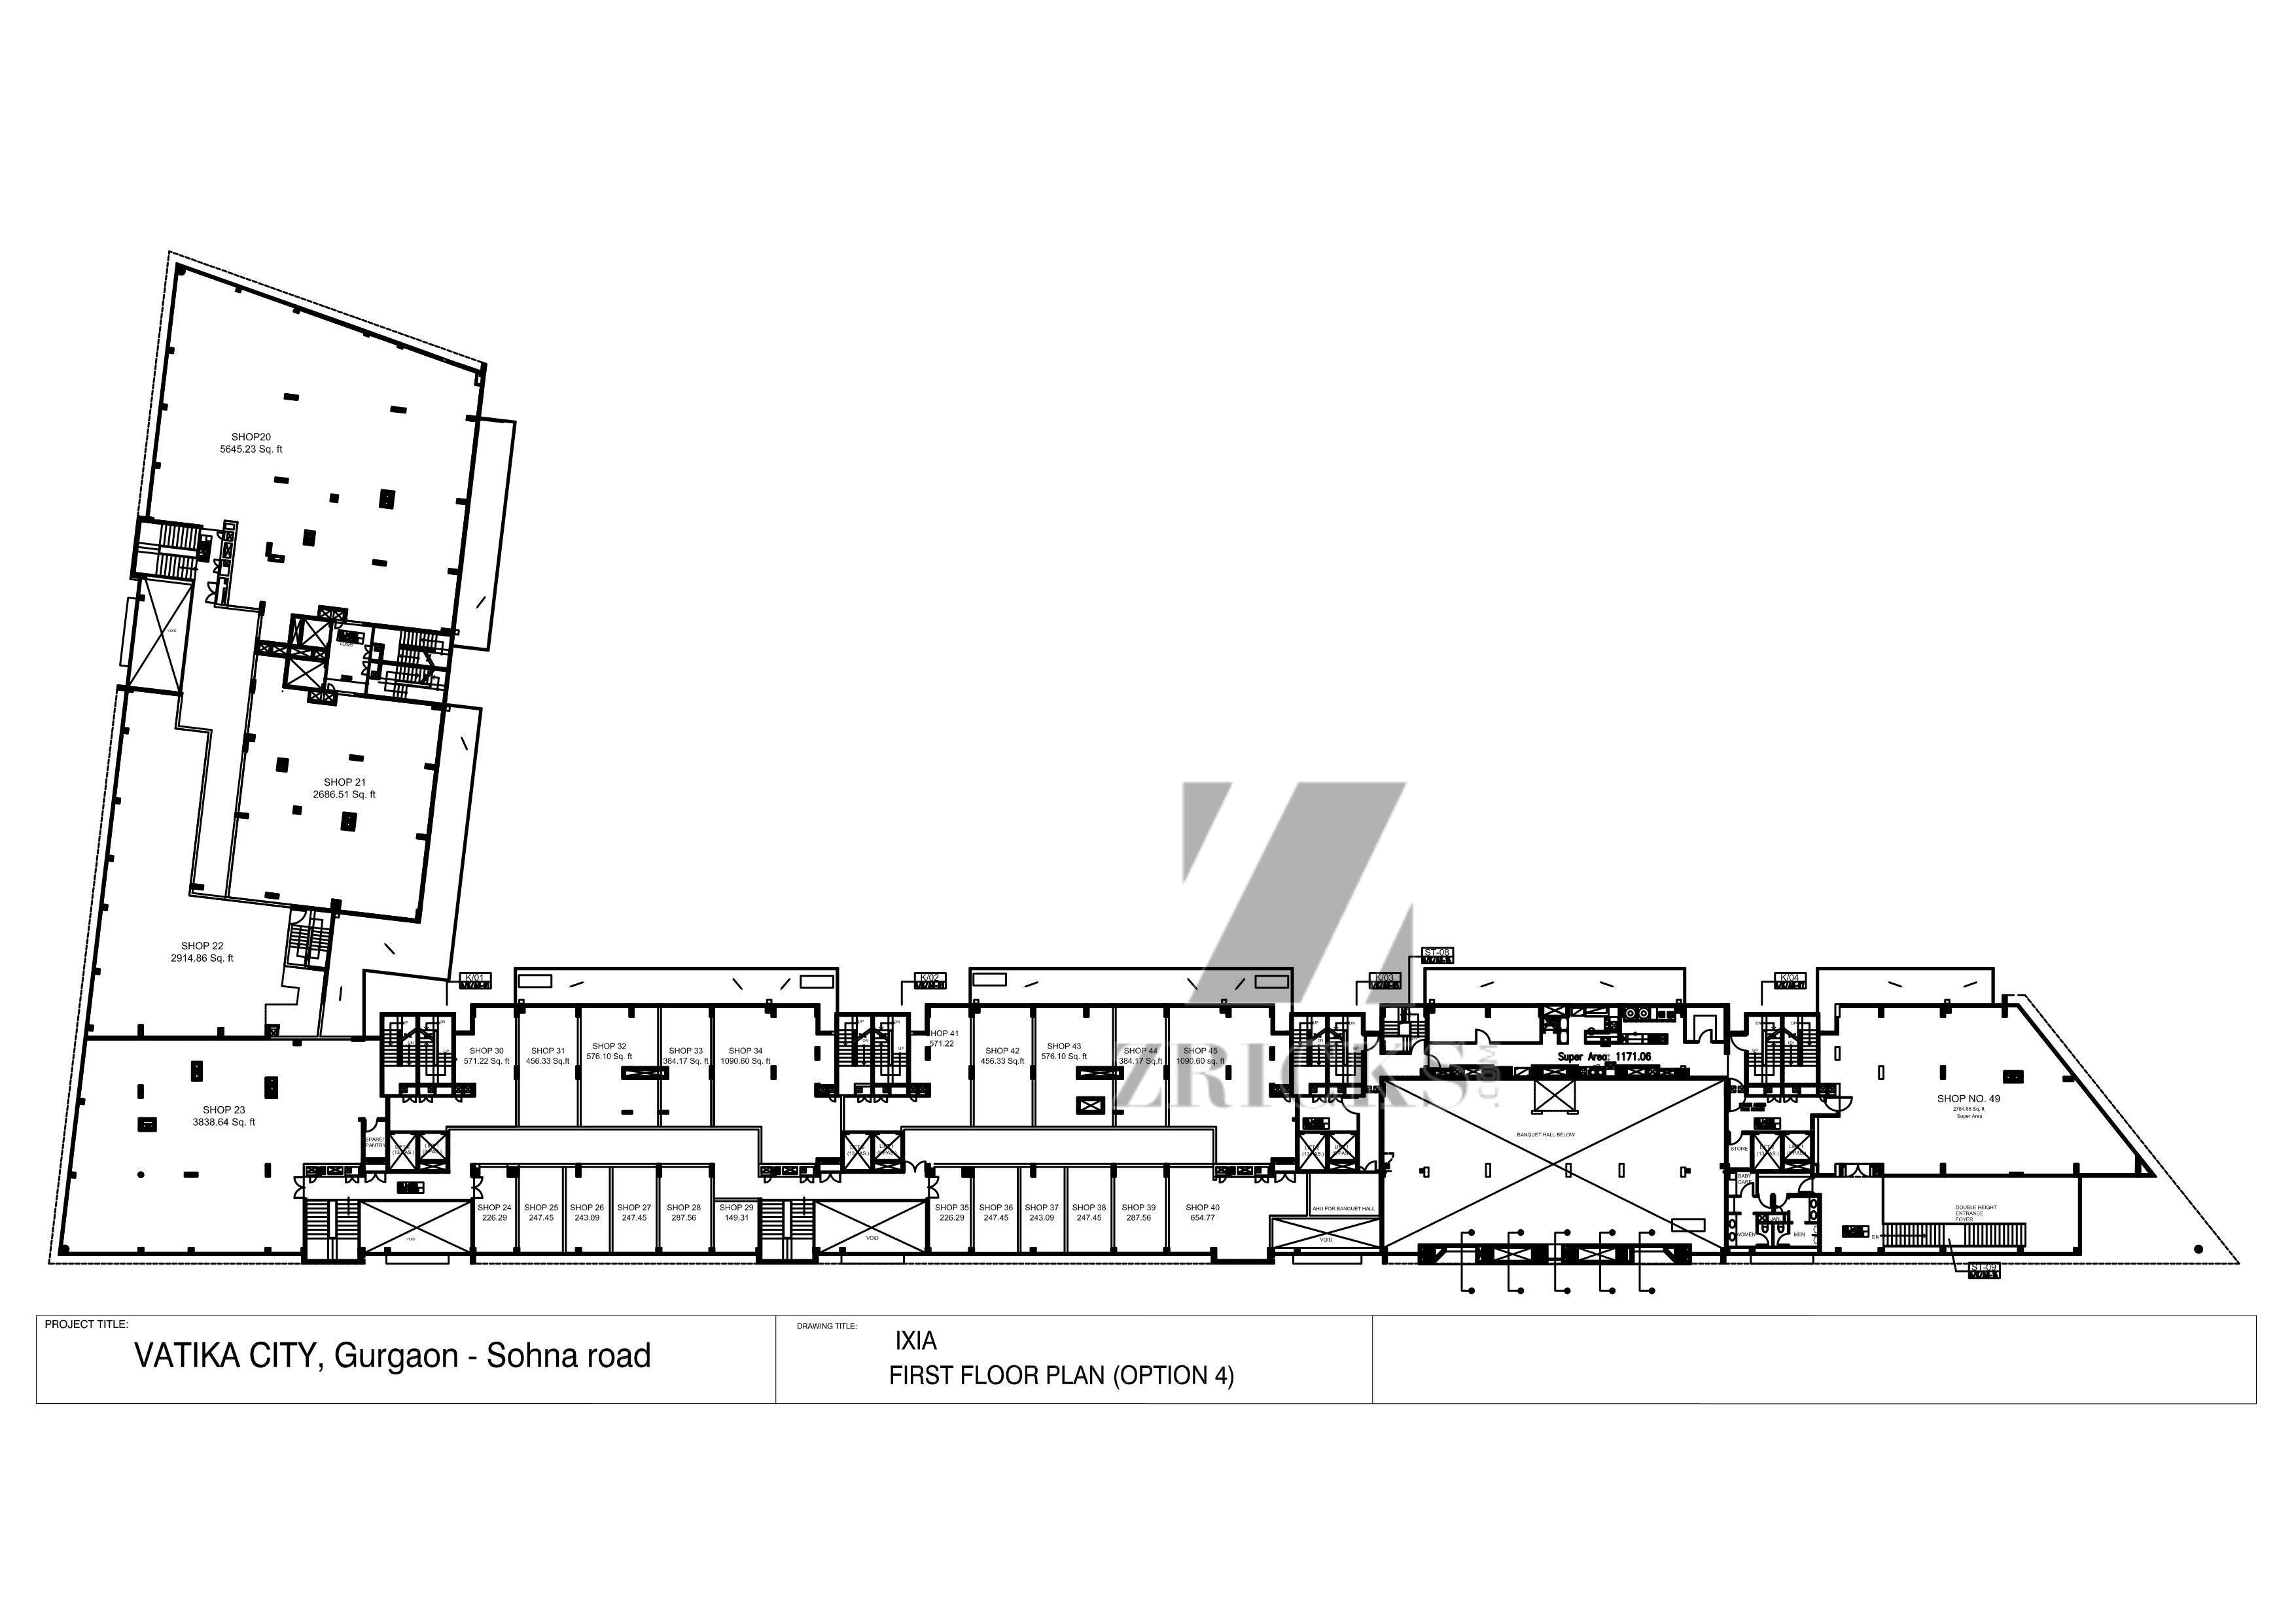 Vatika City Market Floor Plan